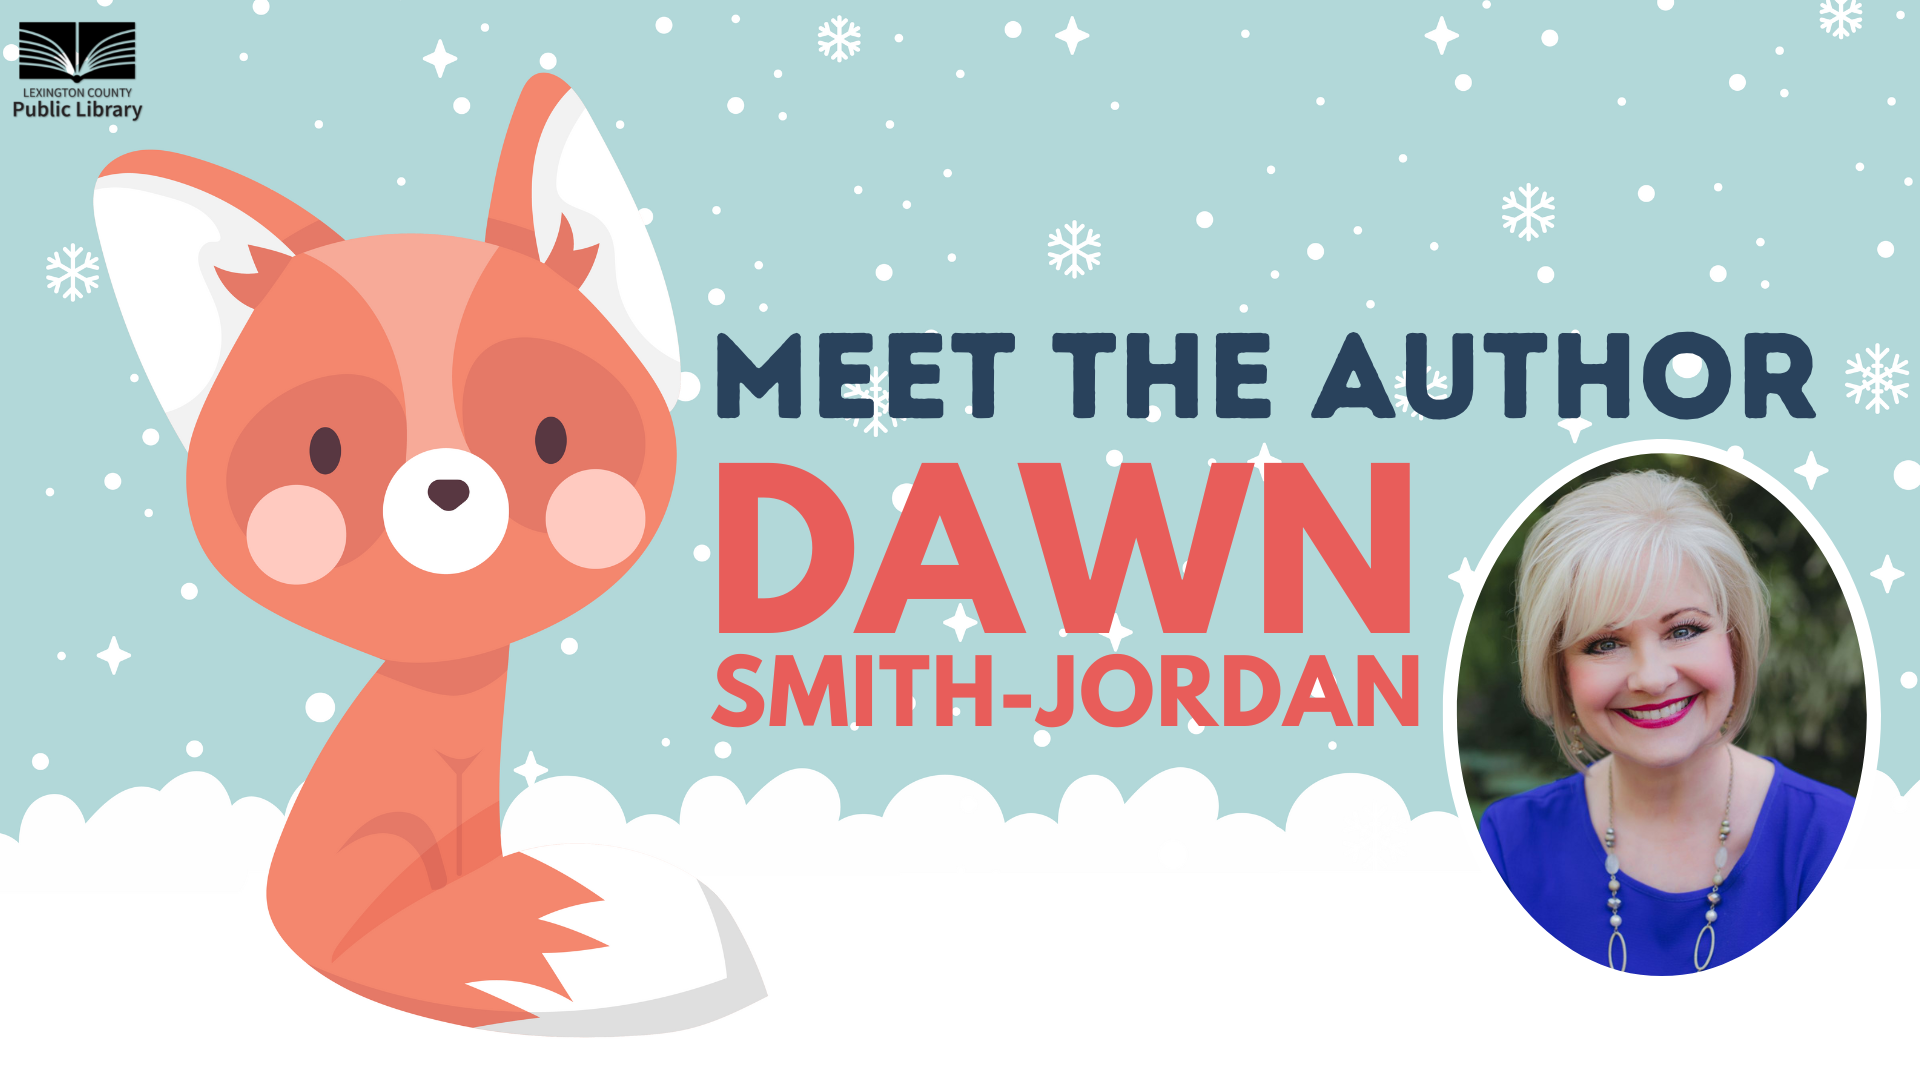 Meet the Author: Dawn Smith-Jordan with image of cartoon fox and headshot of Dawn Smith-Jordan